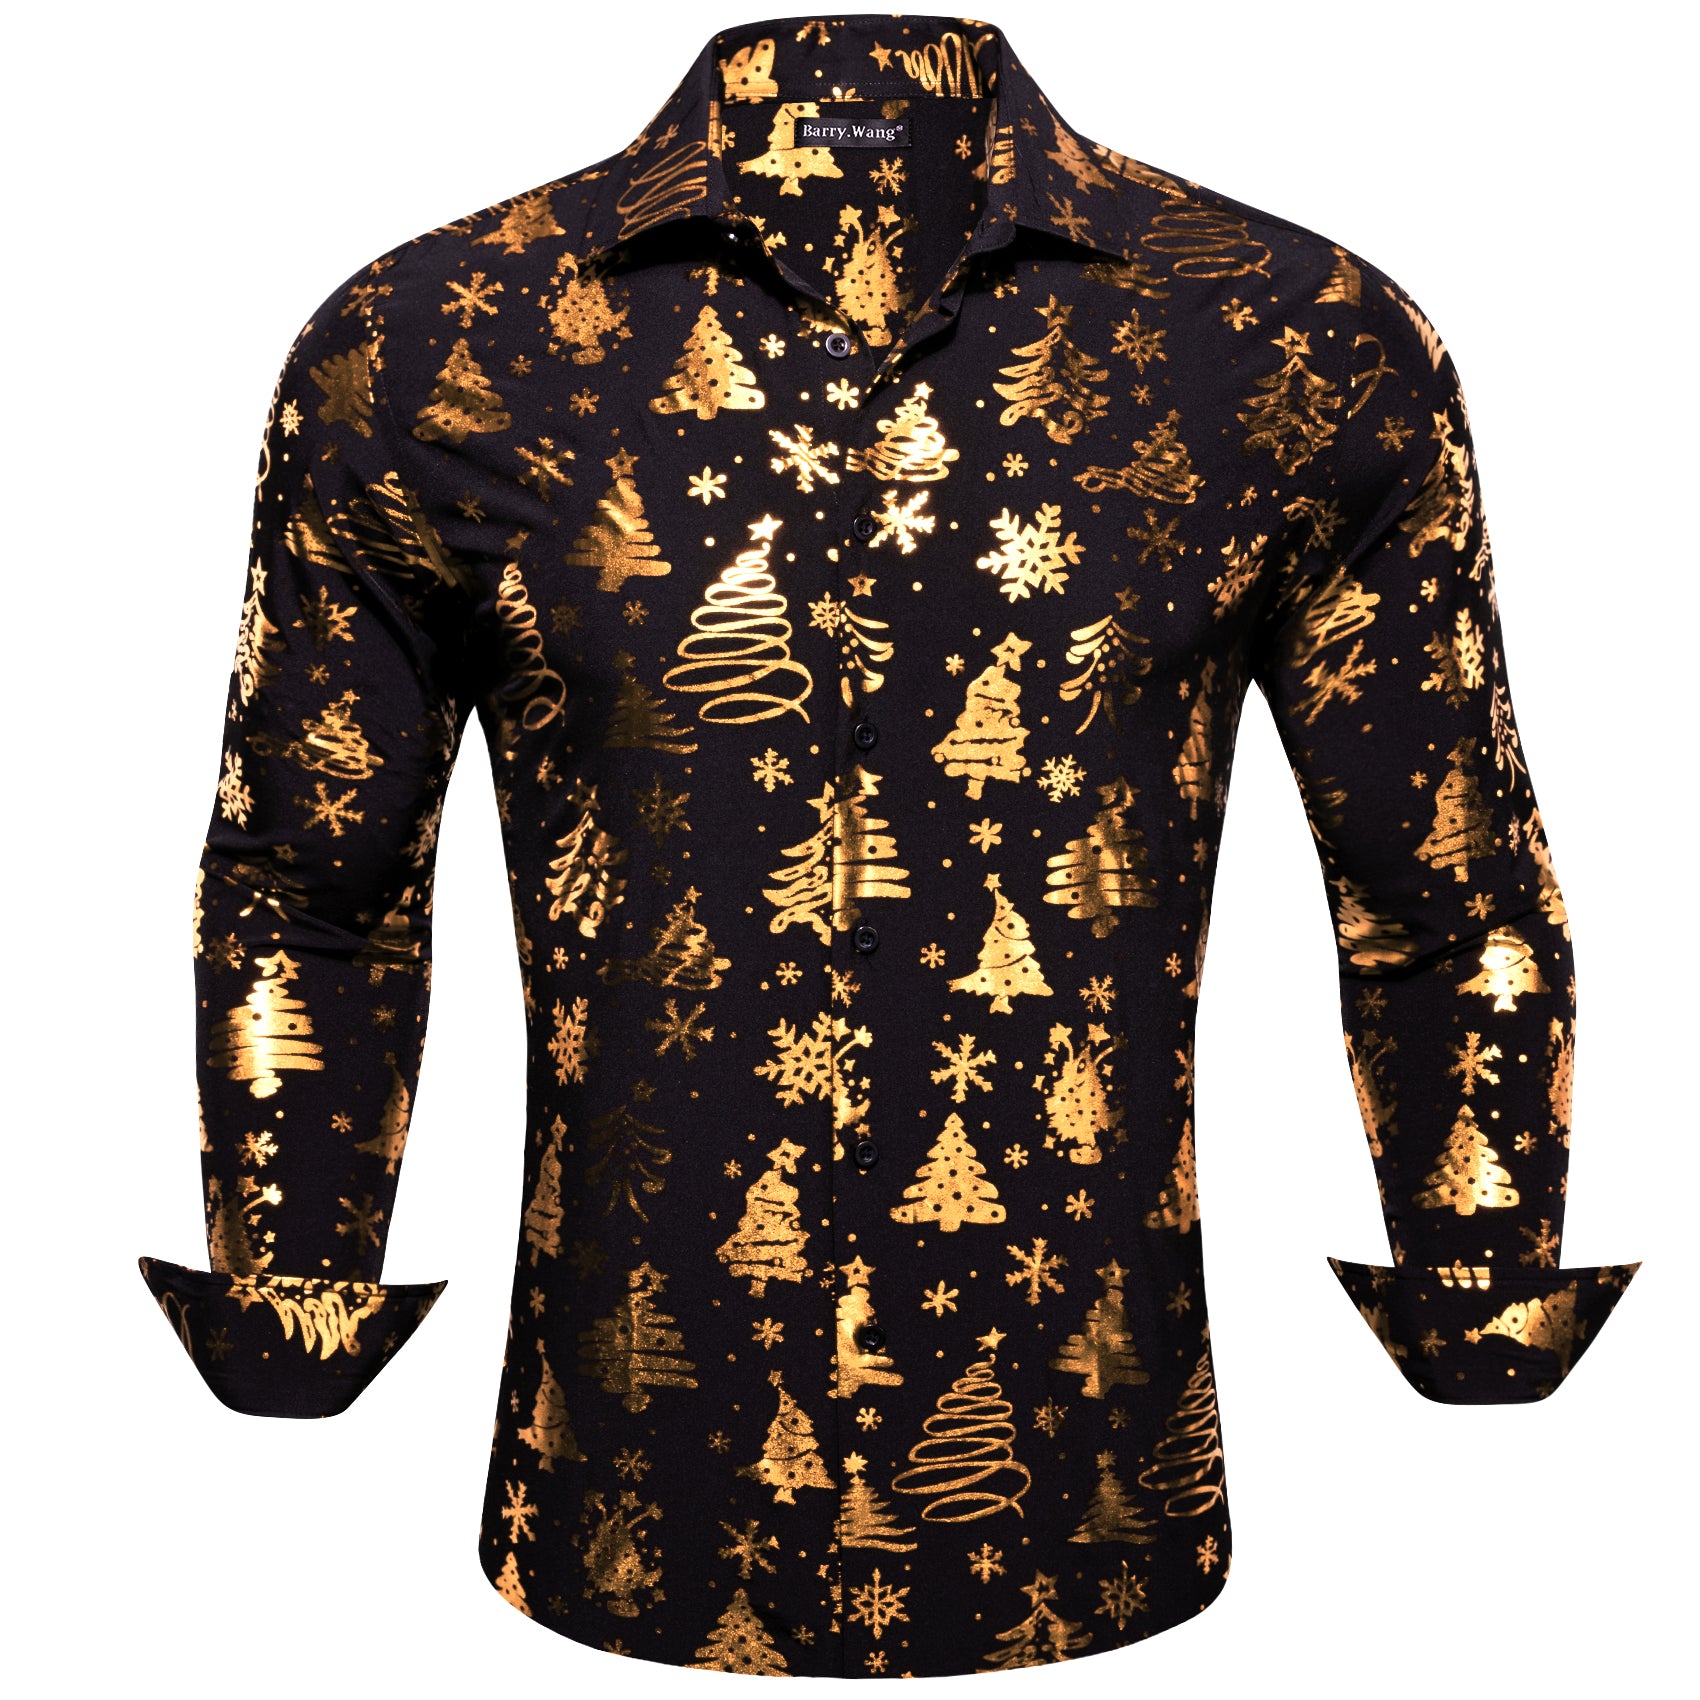 Barry.wang Christmas Shirt Black Gold Xmas Tree Floral Silk Men's Shirt